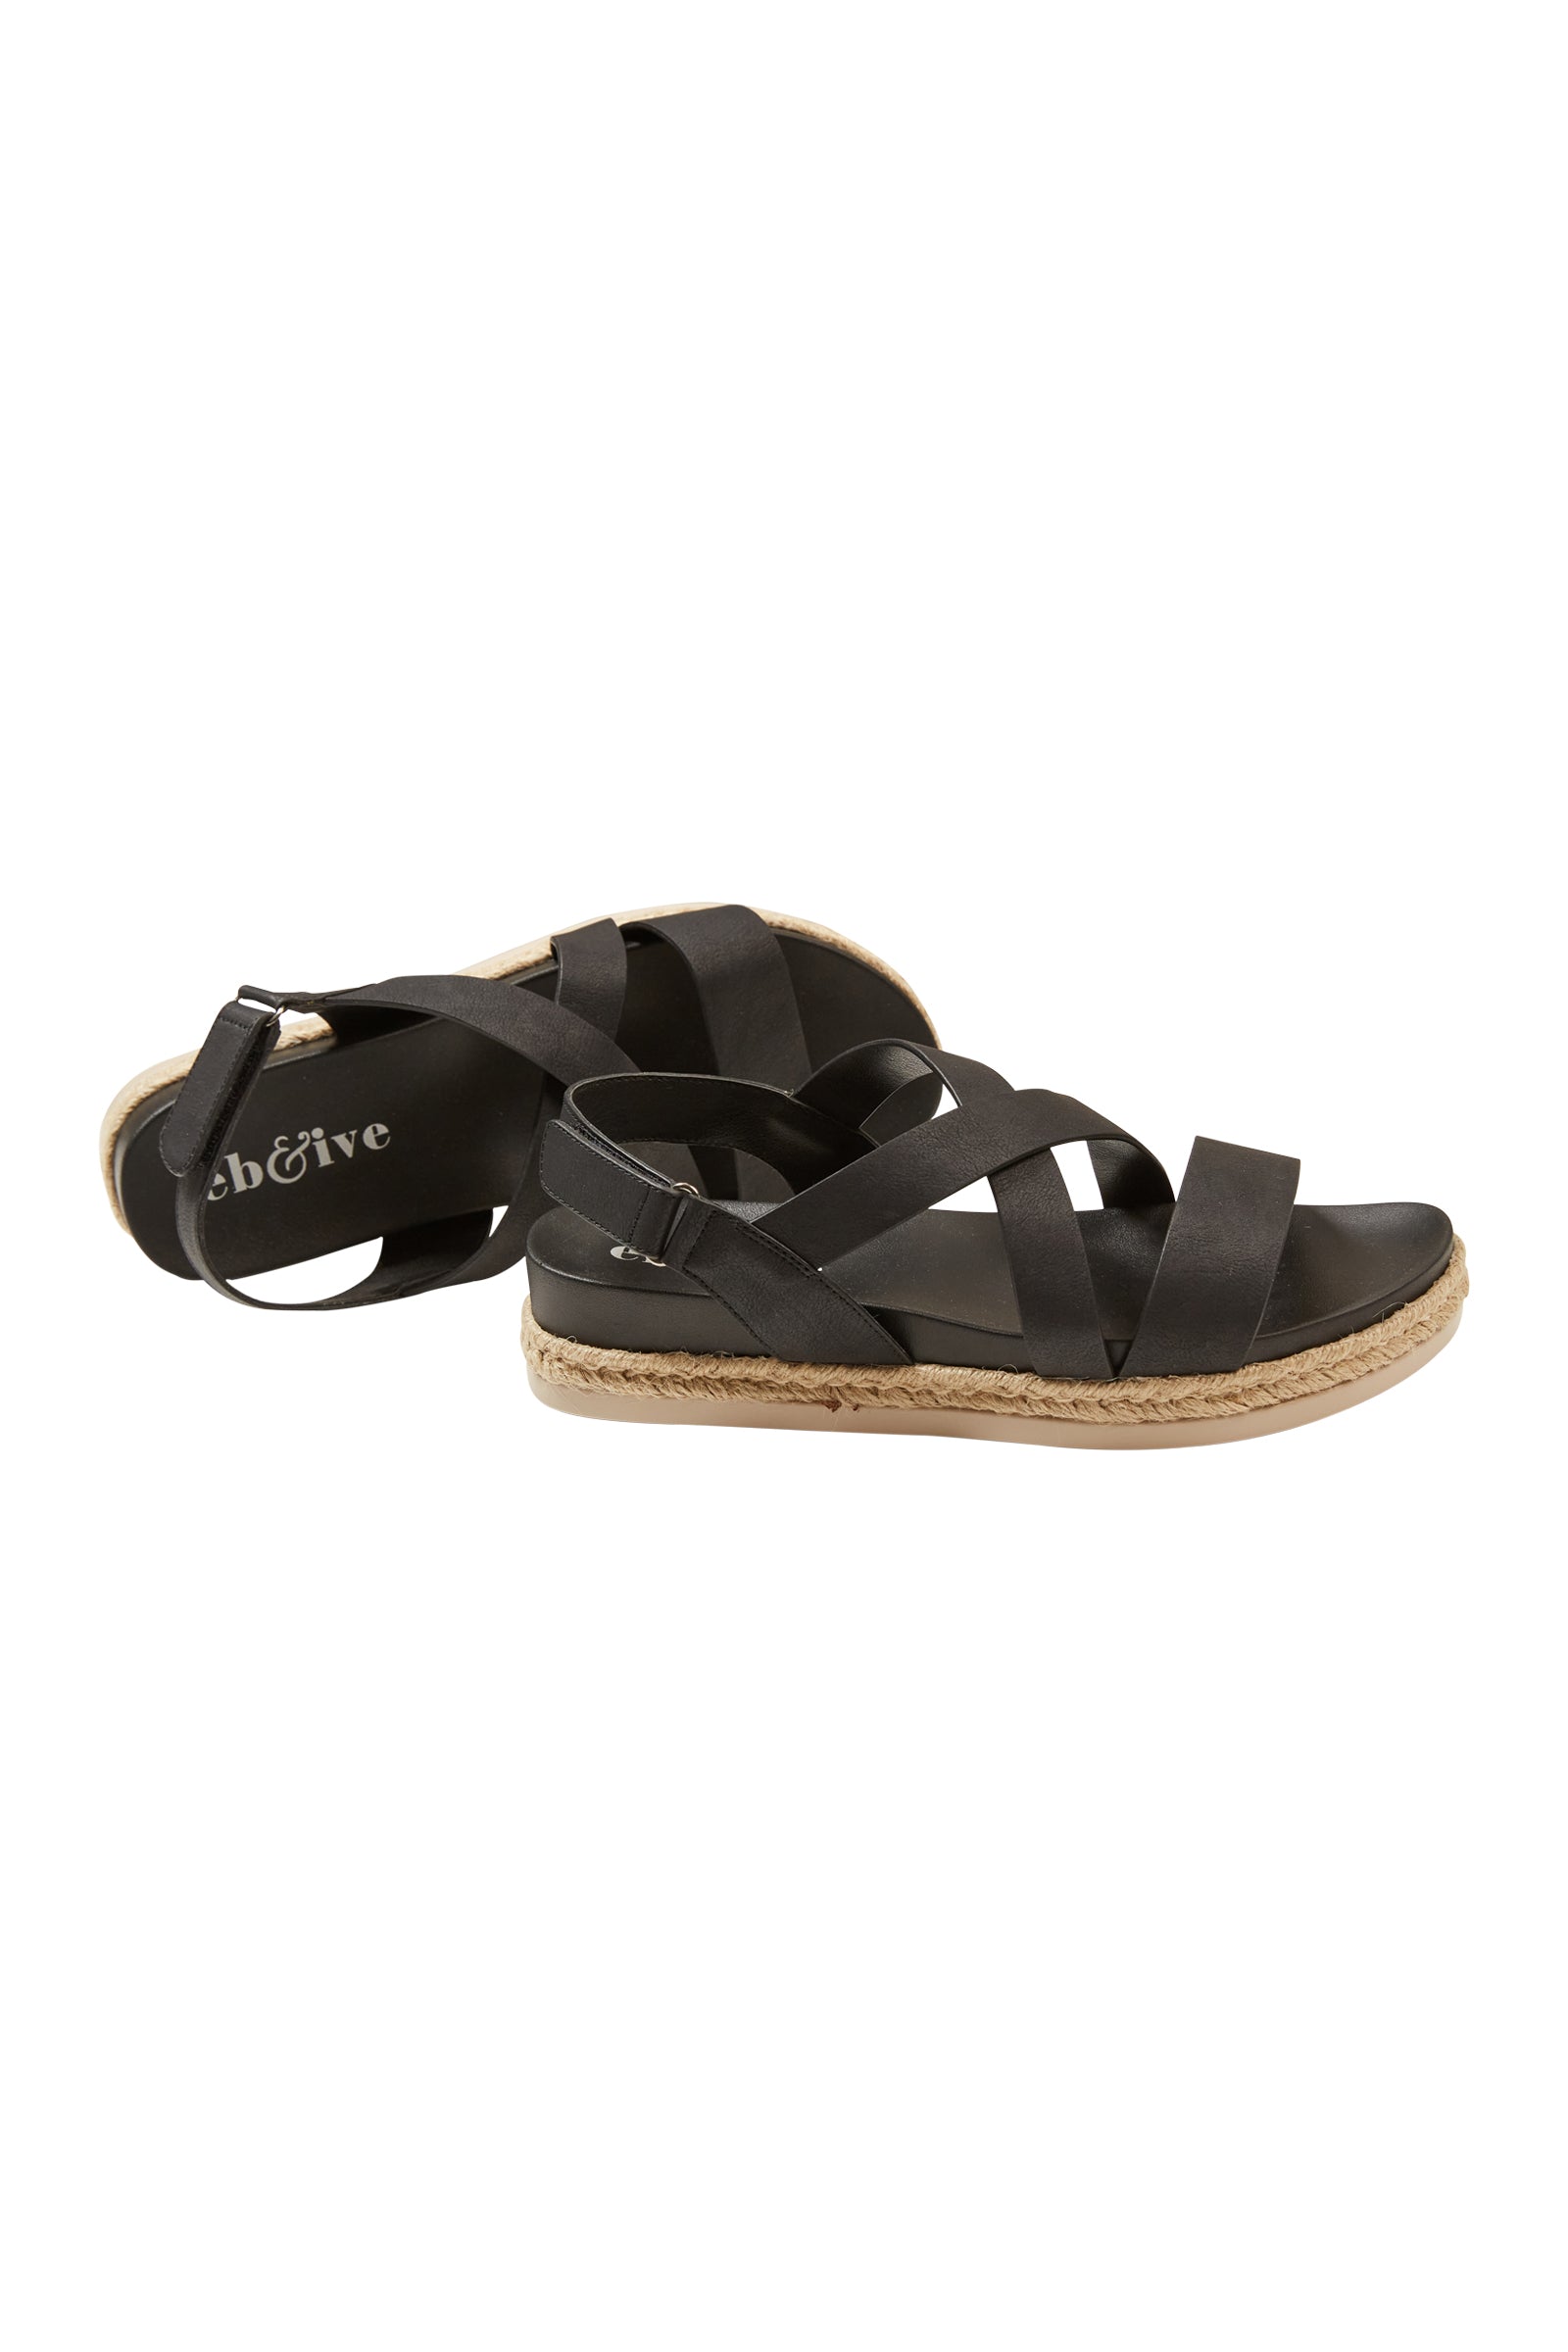 Mimosa Sandal - Black - eb&ive Footwear - Sandals